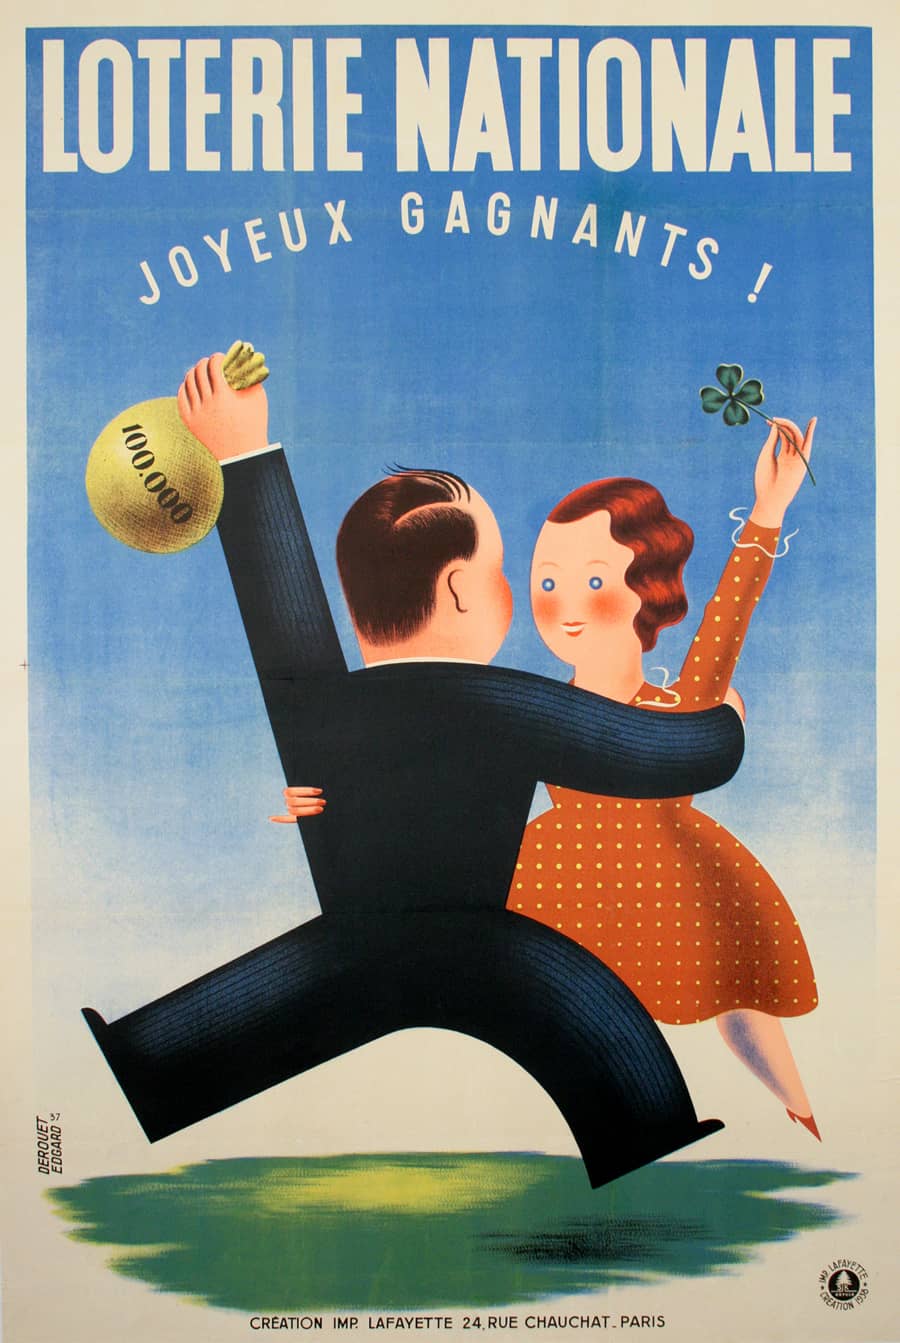 Original Loterie Nationale Poster by Derouet - Joyeux Gangnants 1938